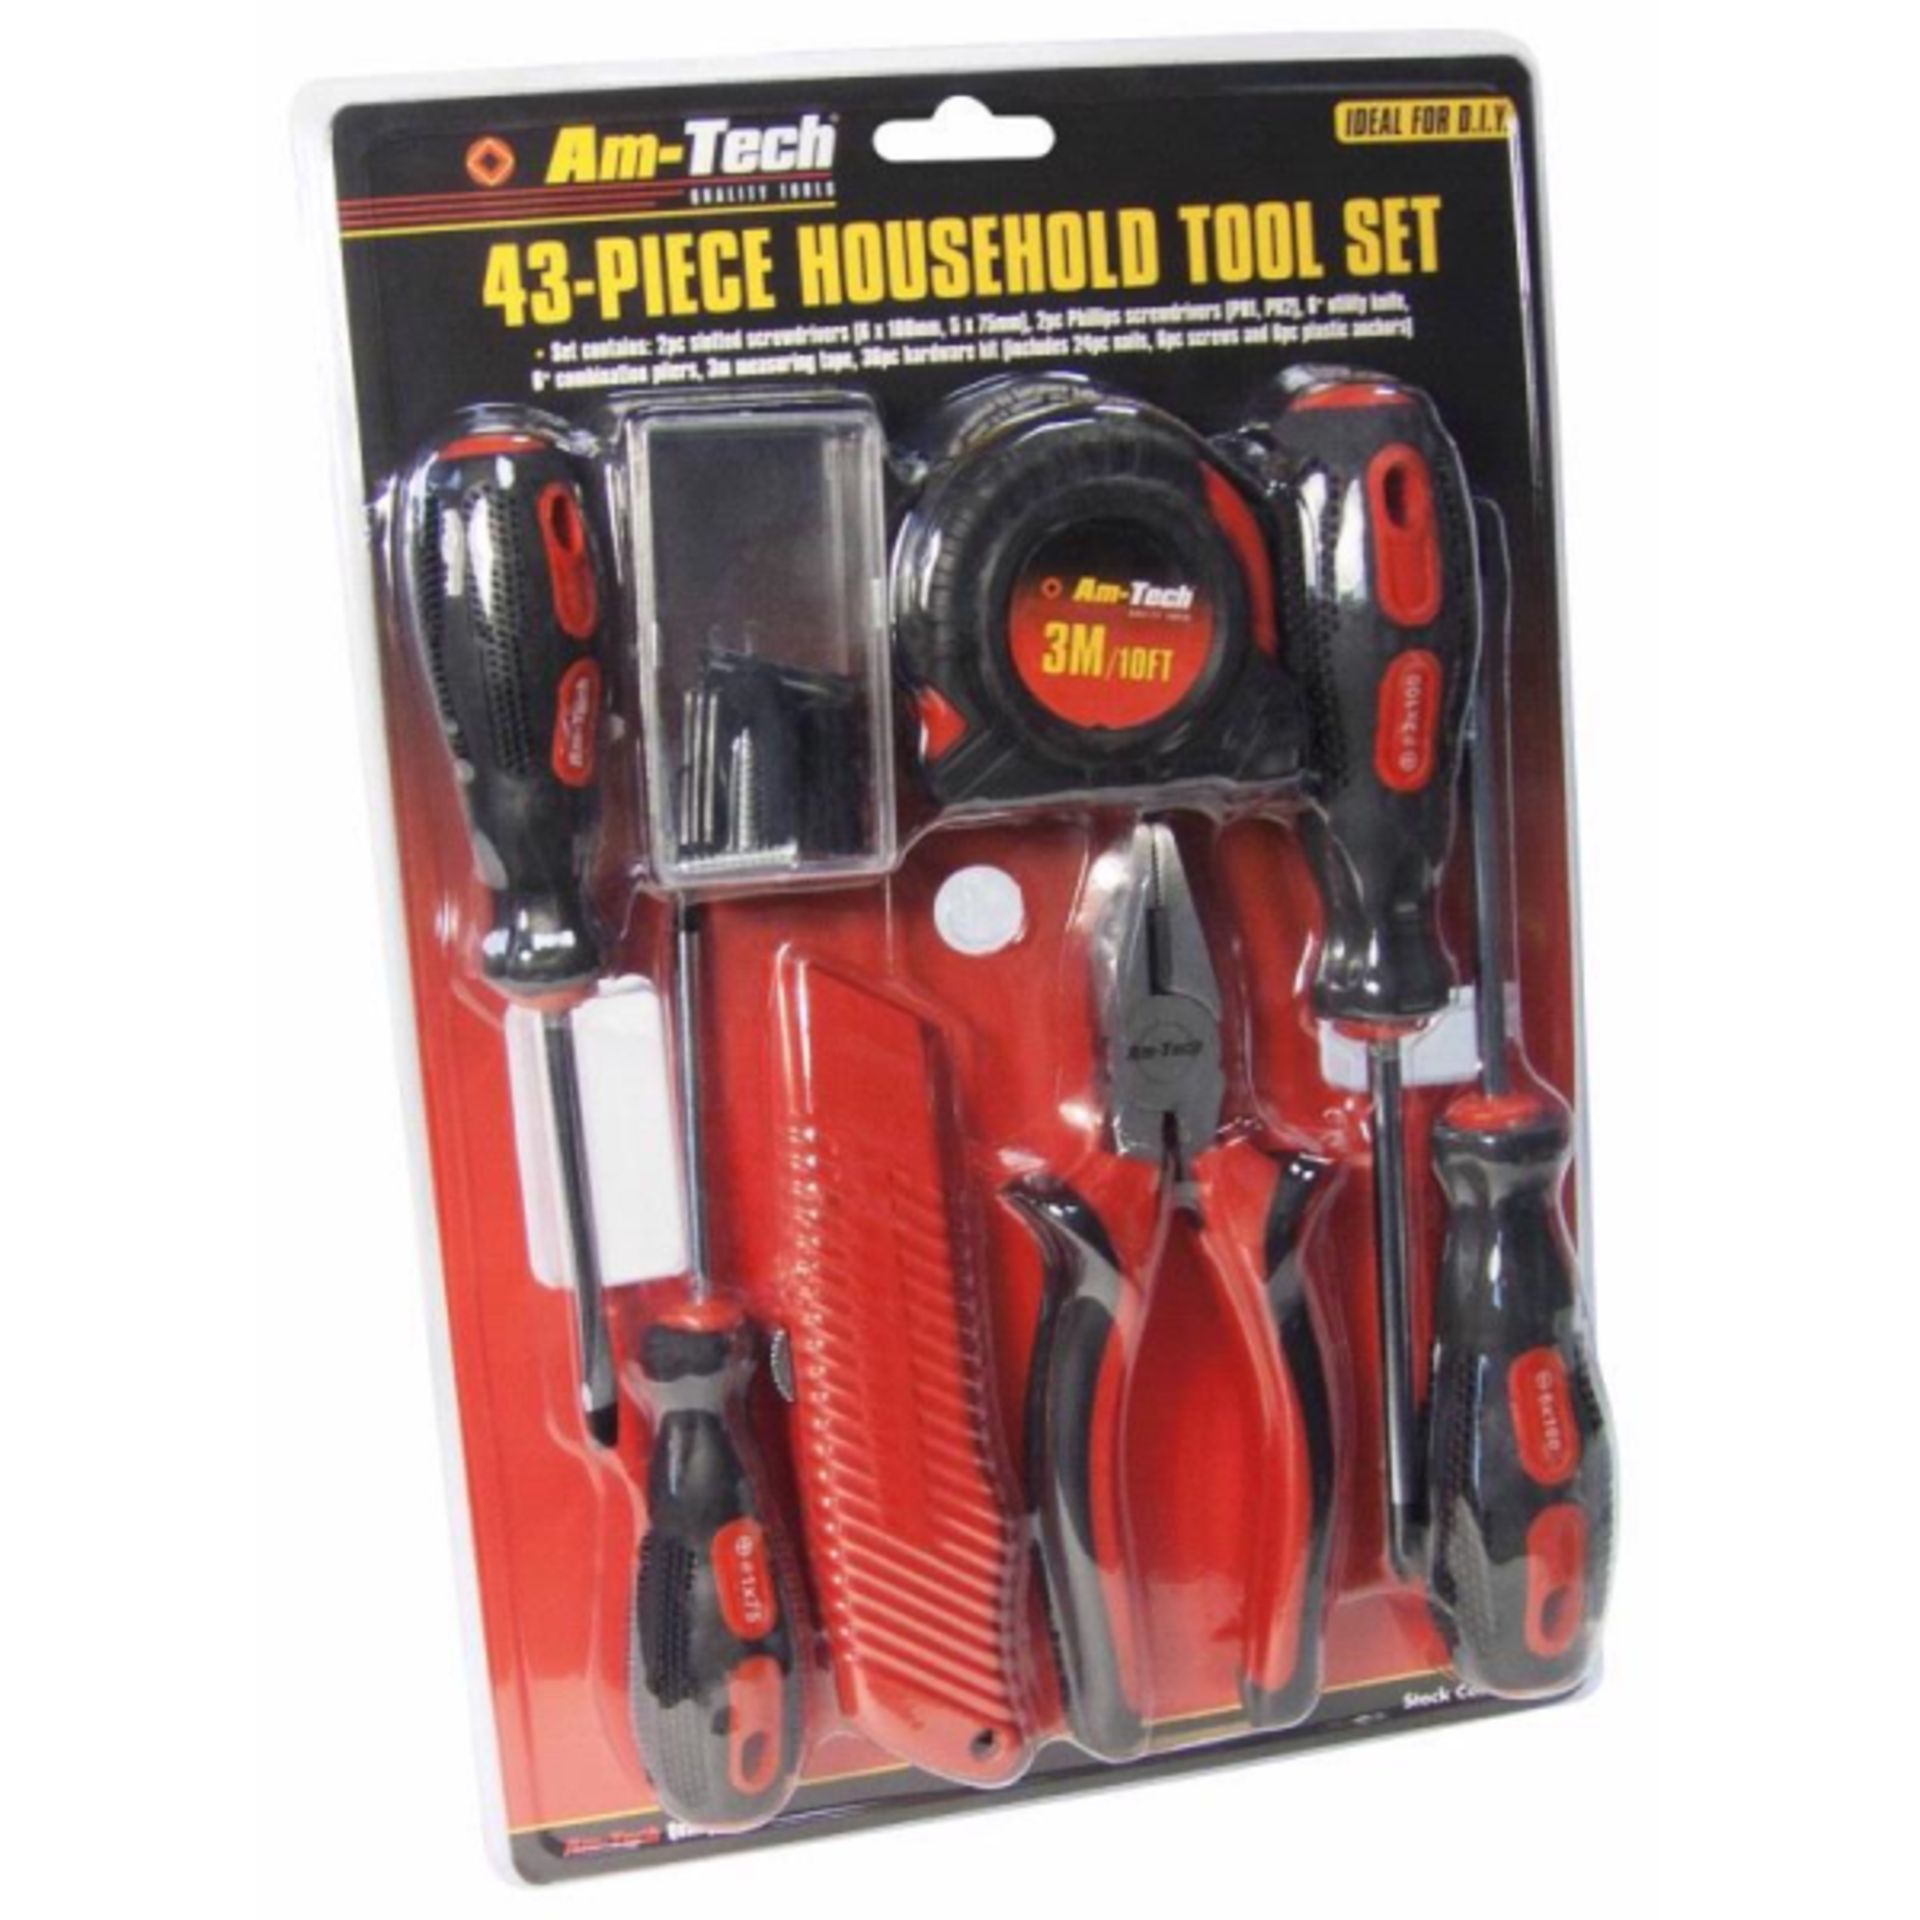 V Brand New Forty Three Piece Household Tool Set Inc Pliers, Screwdrivers Etc X 2 YOUR BID PRICE